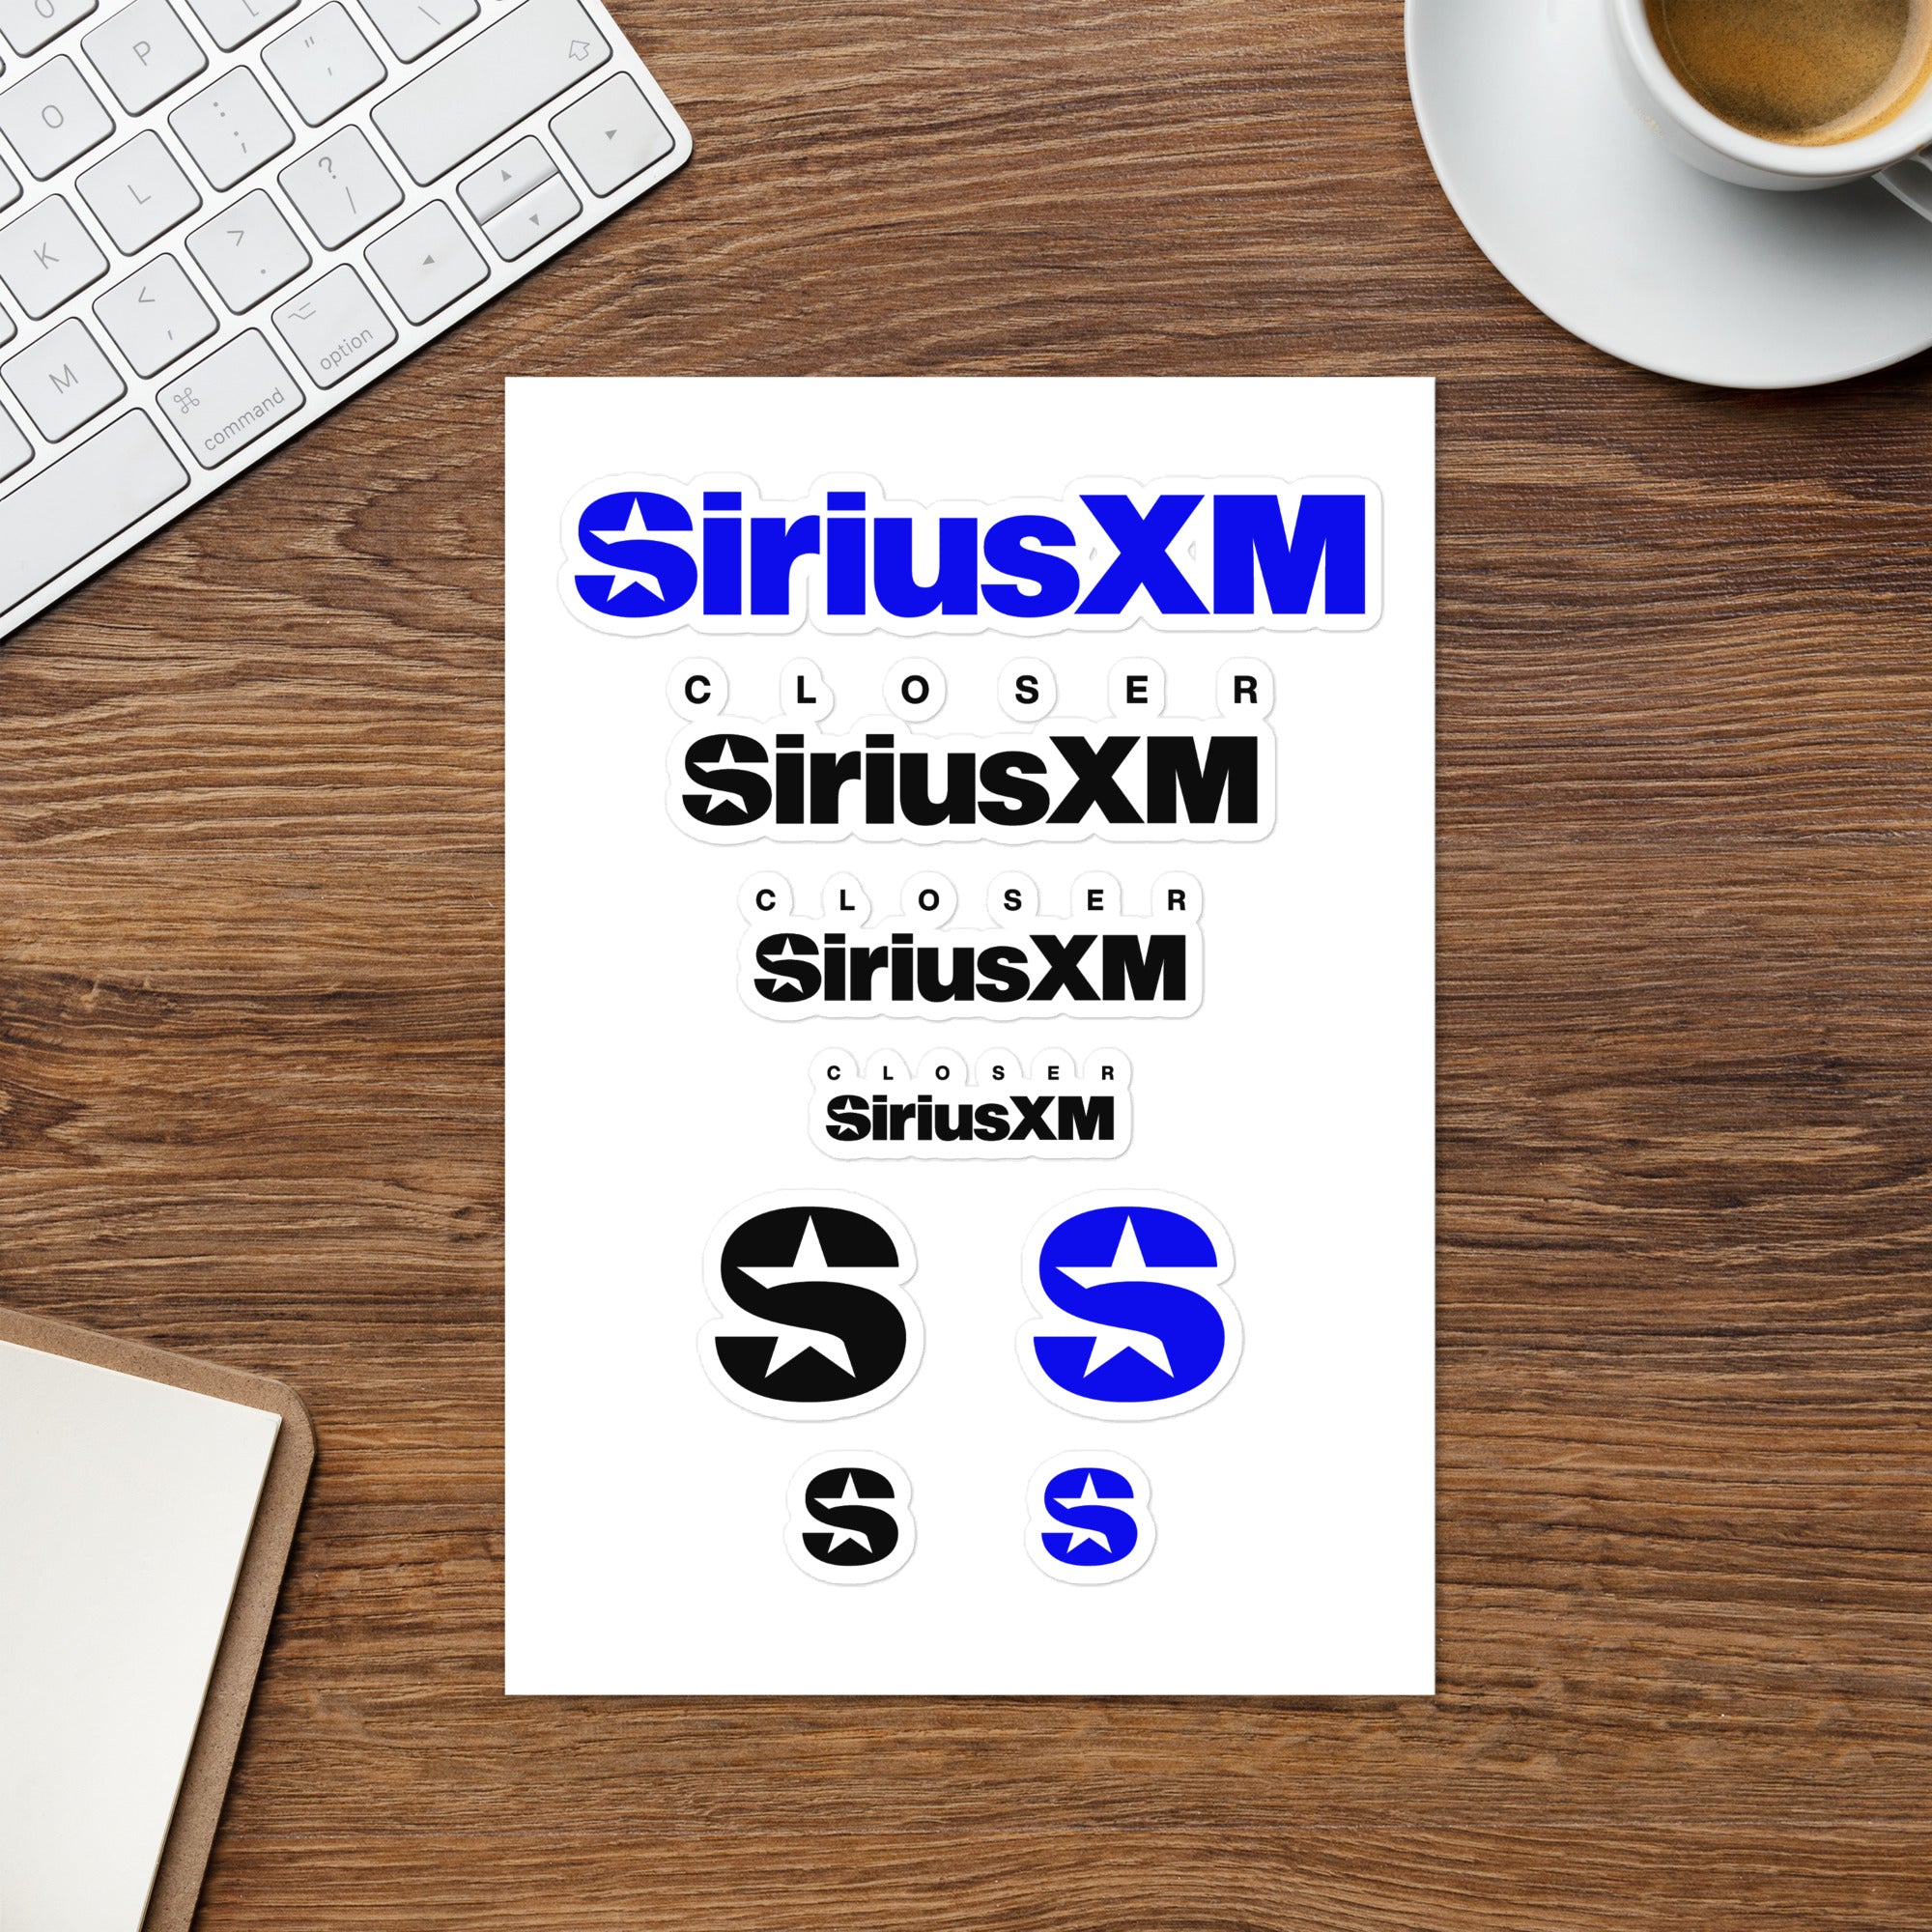 SiriusXM Closer: Classic Sticker Sheet